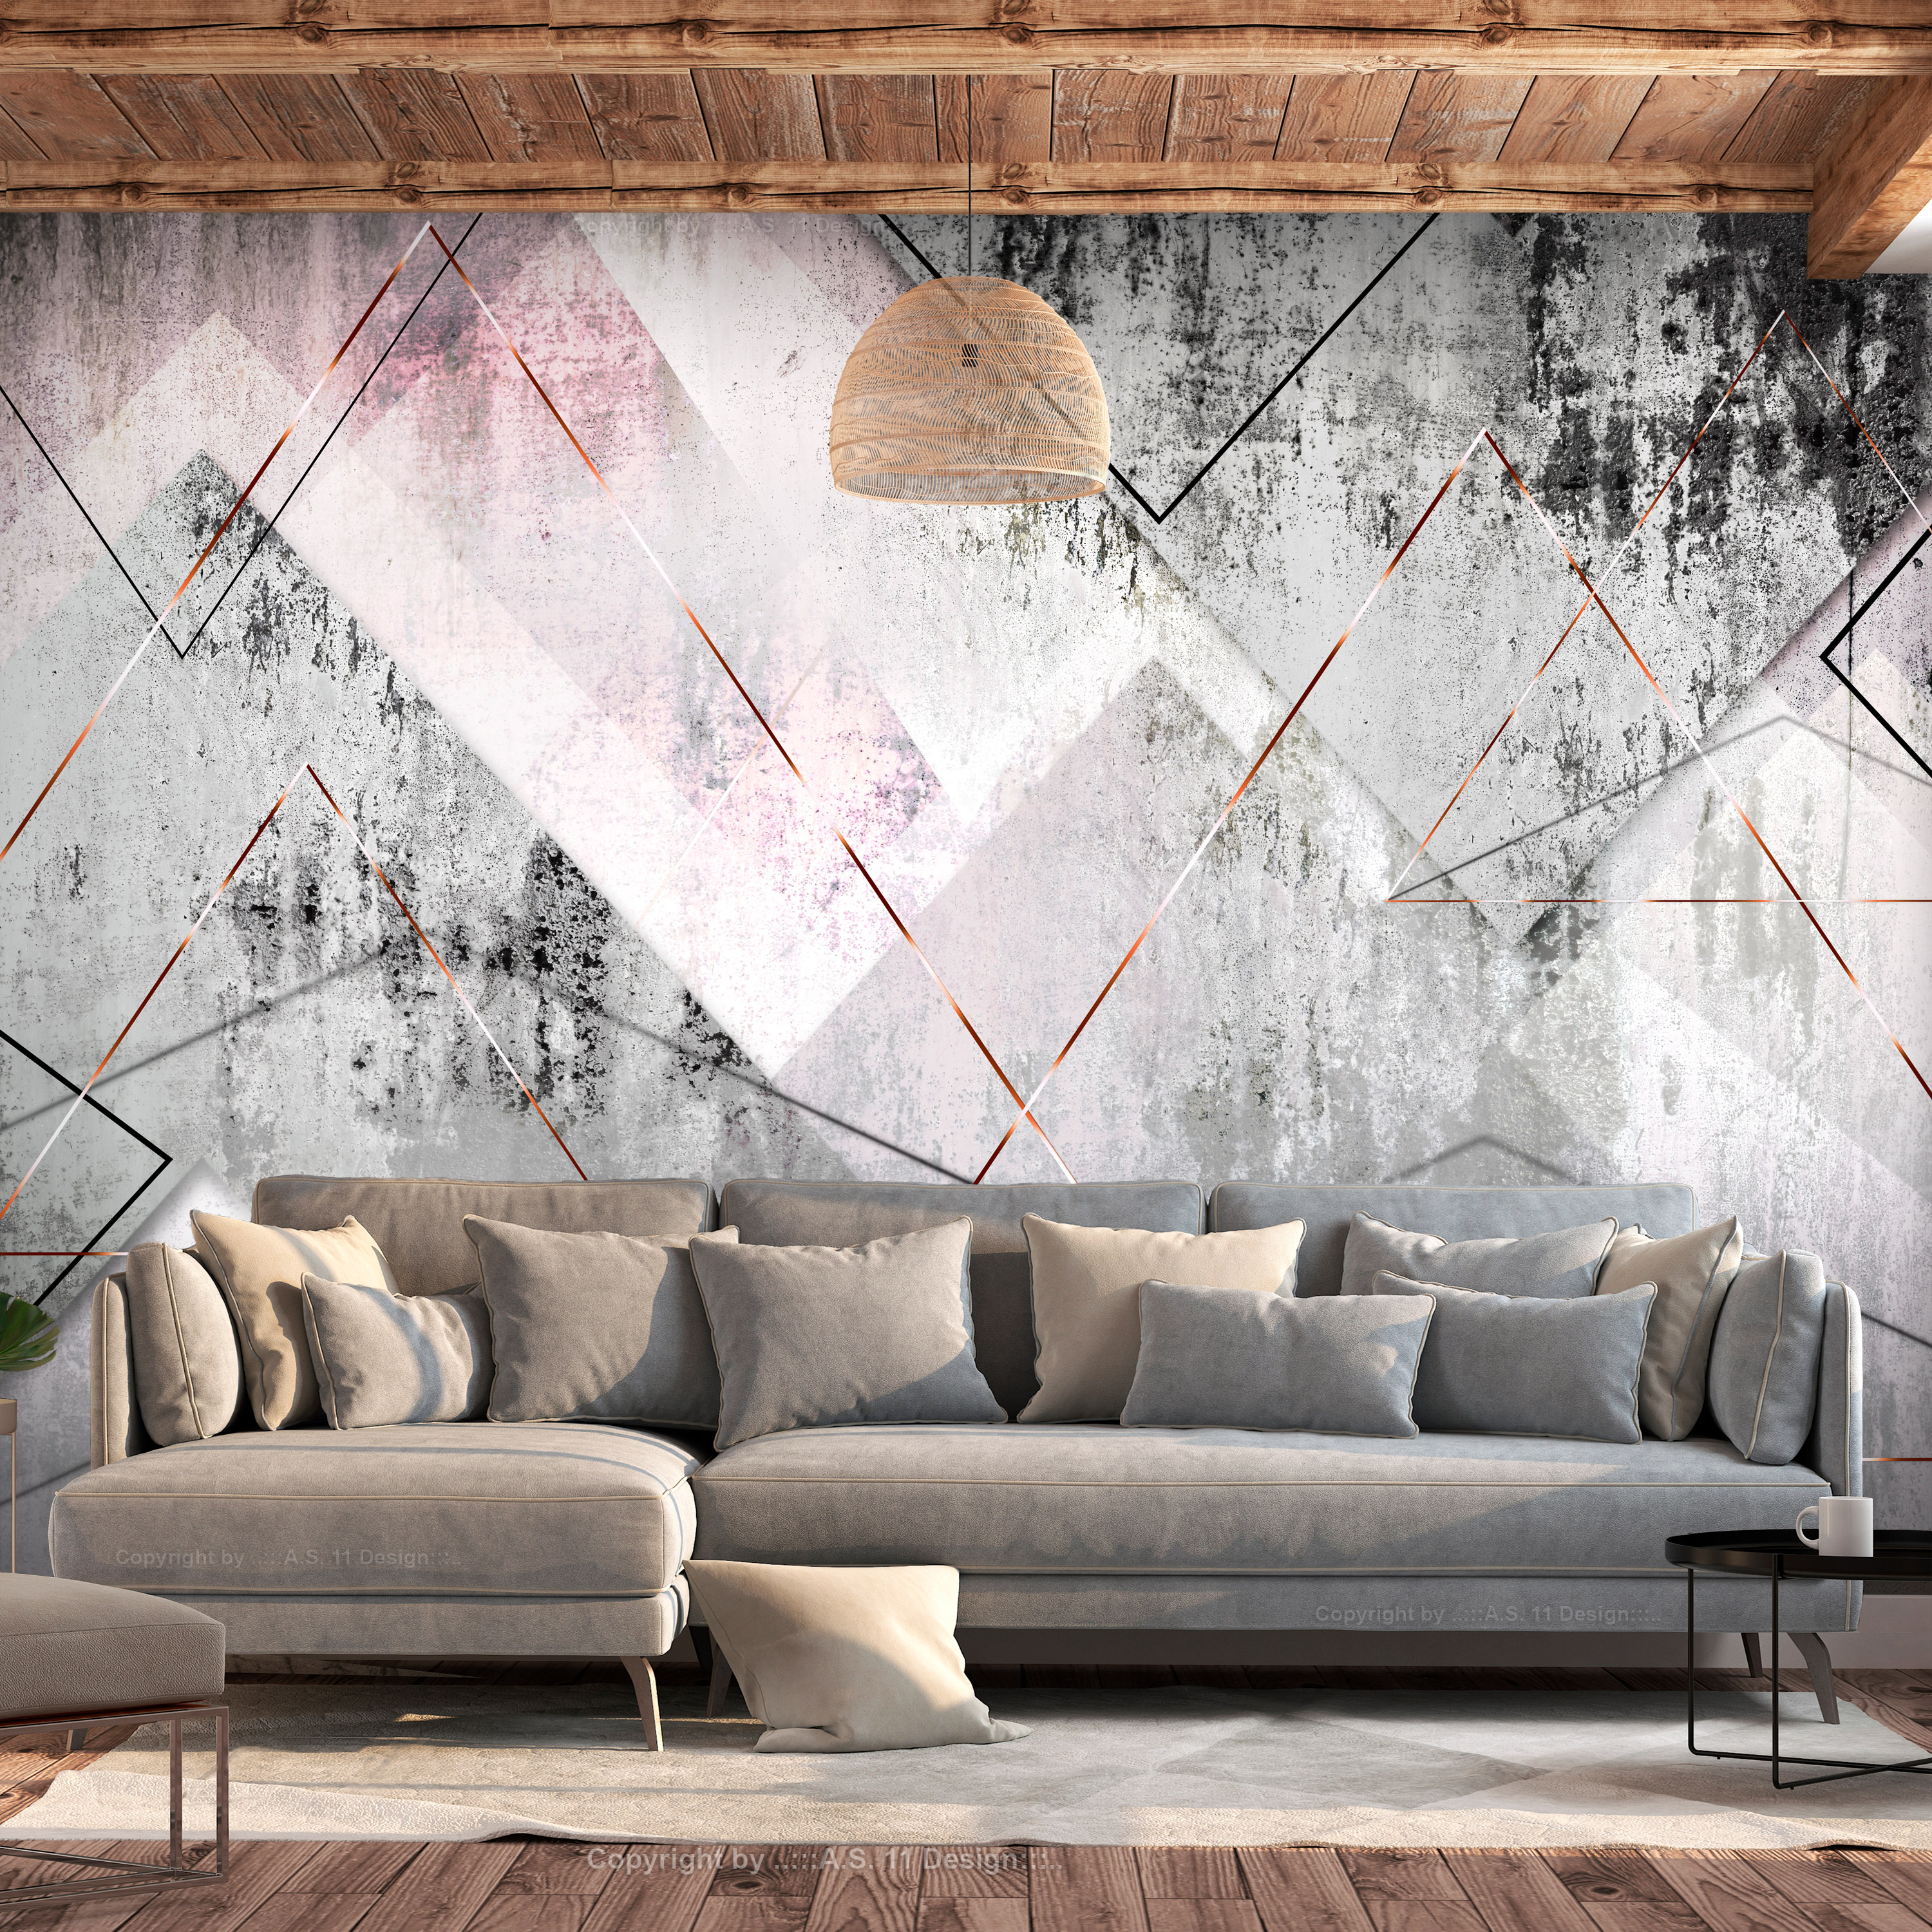 Self-adhesive Wallpaper - Triangular Perspective - 147x105